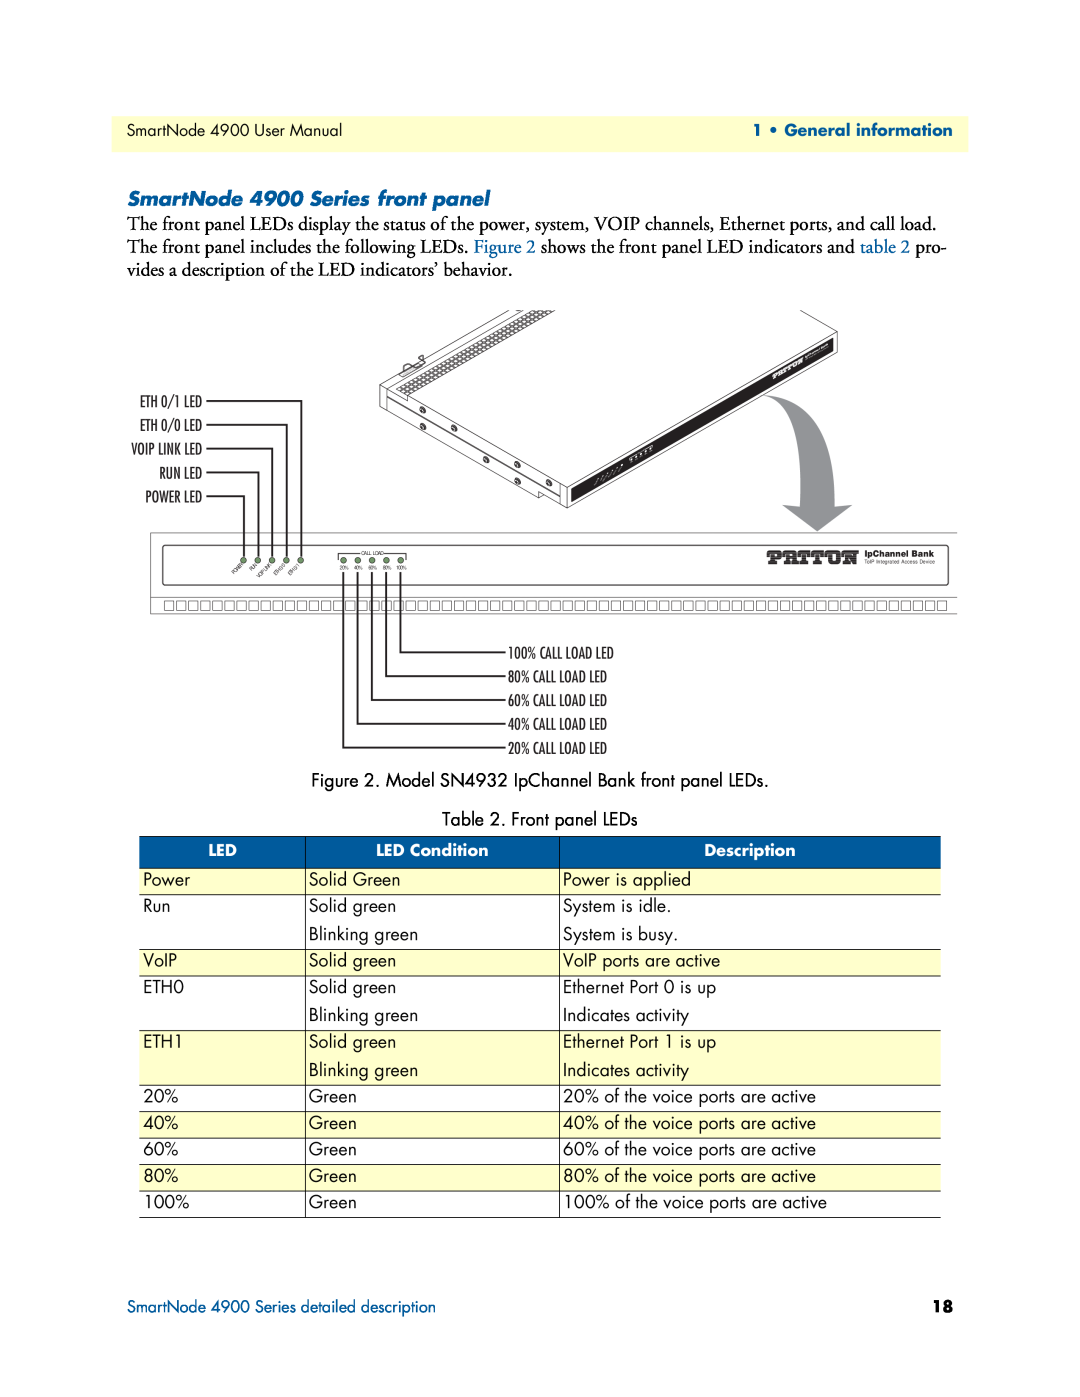 Patton electronic user manual SmartNode 4900 Series front panel, LED Condition, Description 